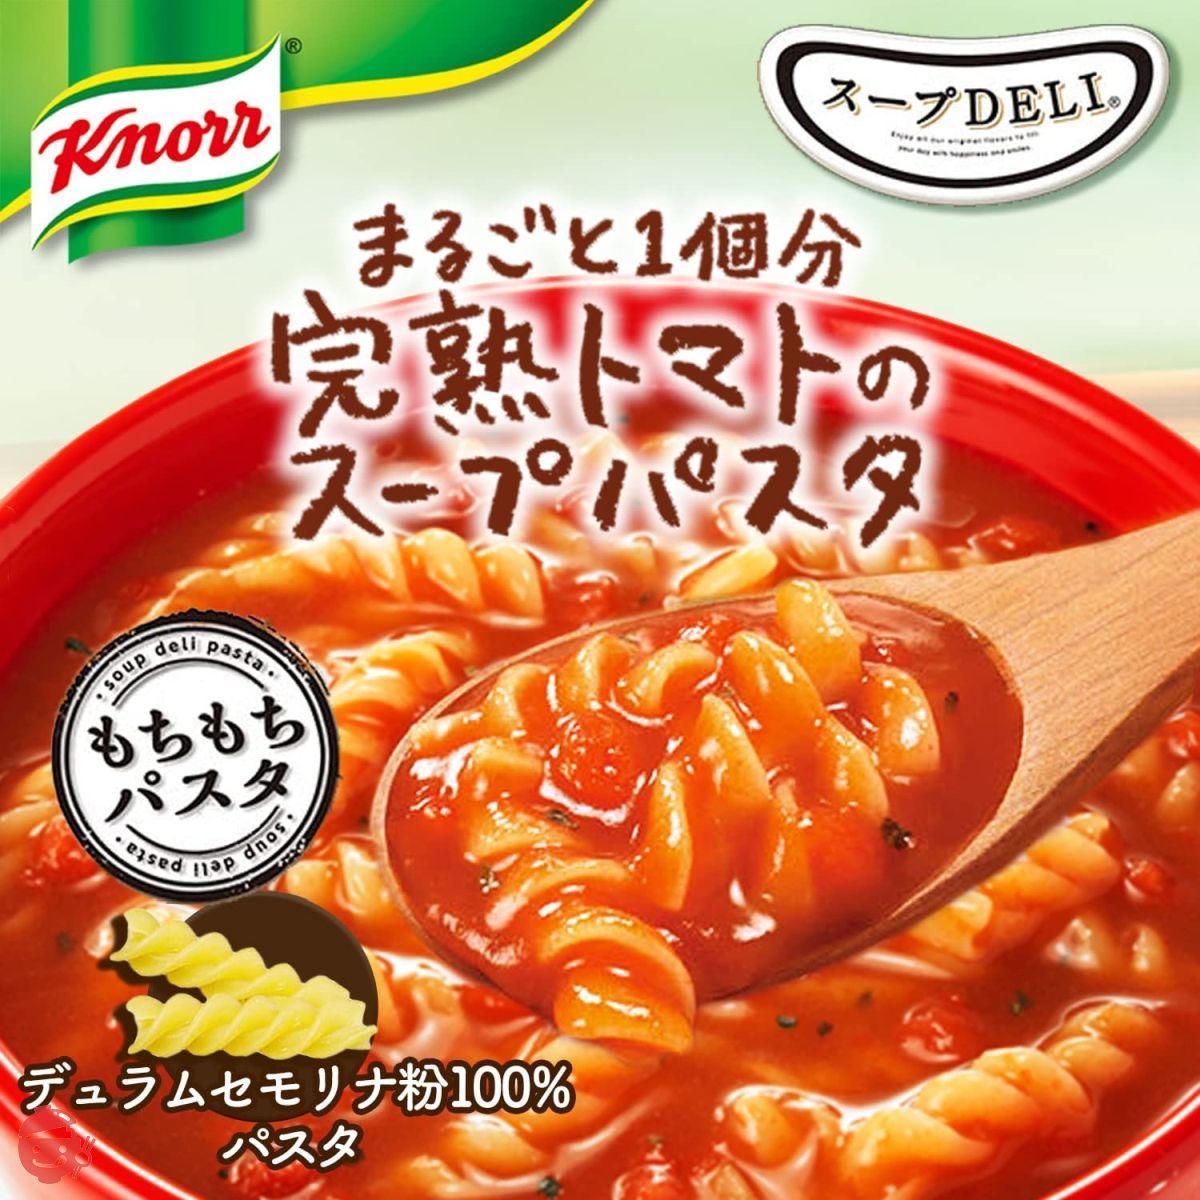 Ajinomoto Knorr Soup DELI Ripe Tomato Soup Pasta (29.4g x 3 servings) –  Japacle